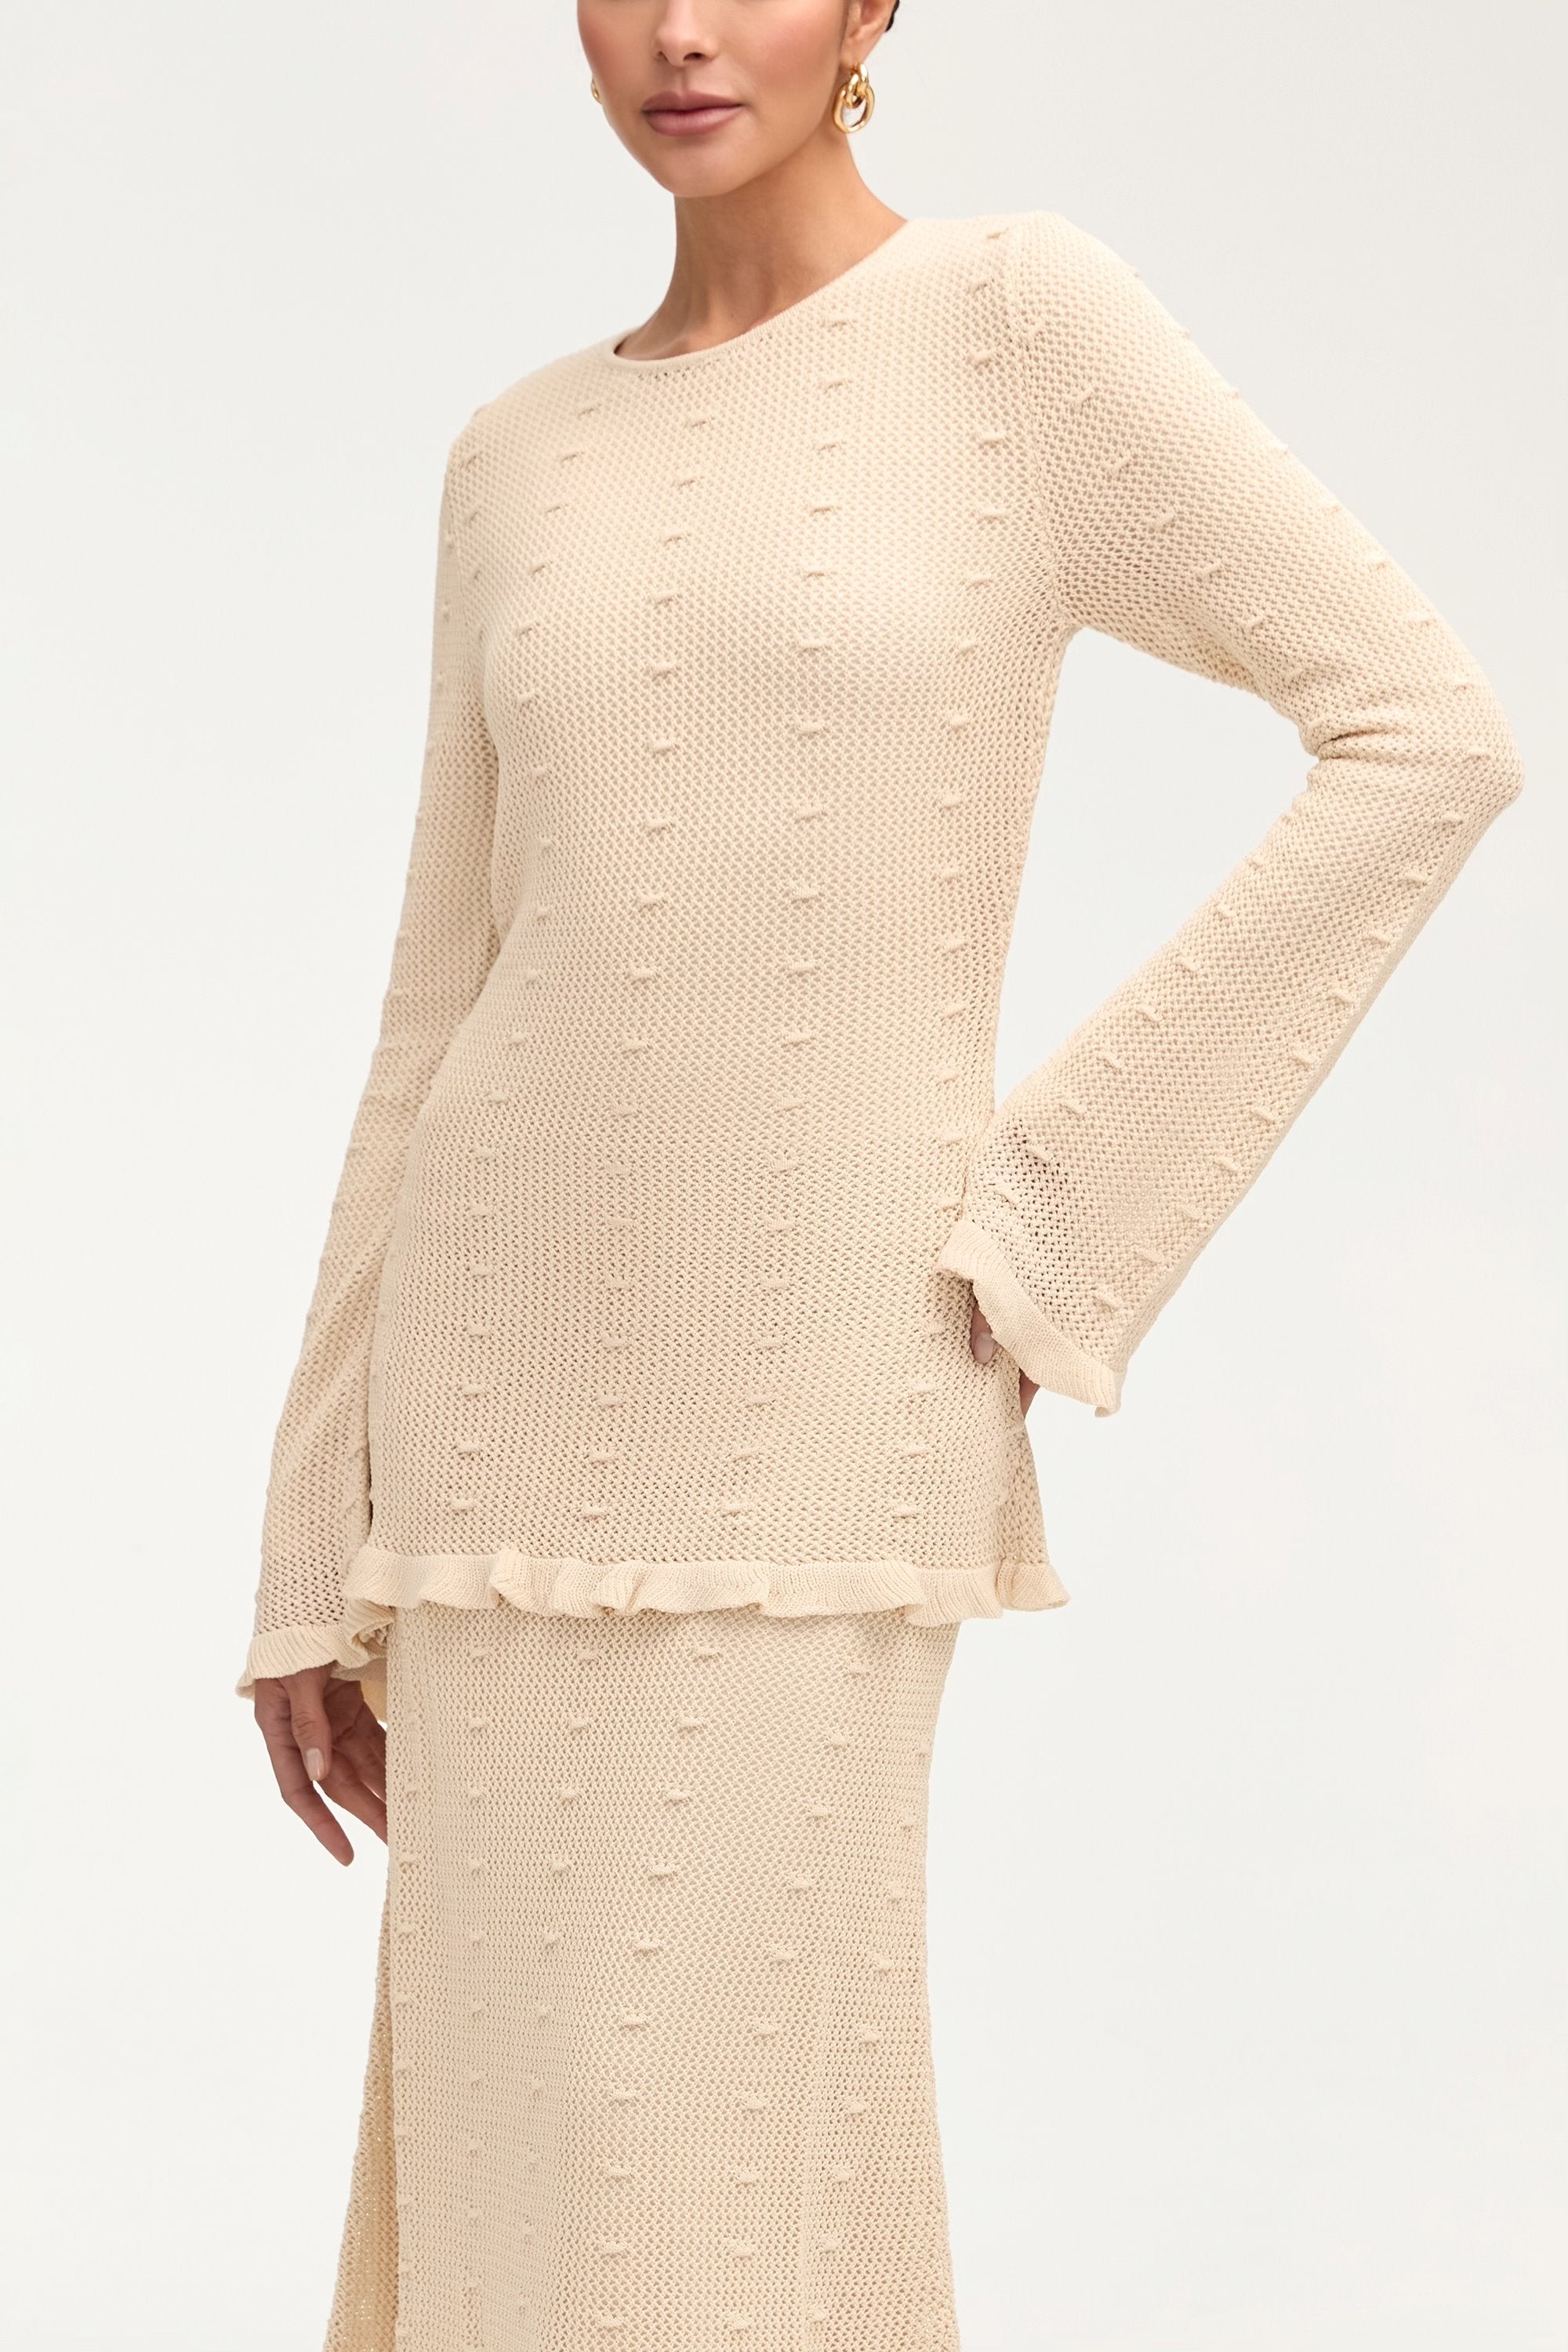 Yara Crochet Top - Off White Clothing epschoolboard 